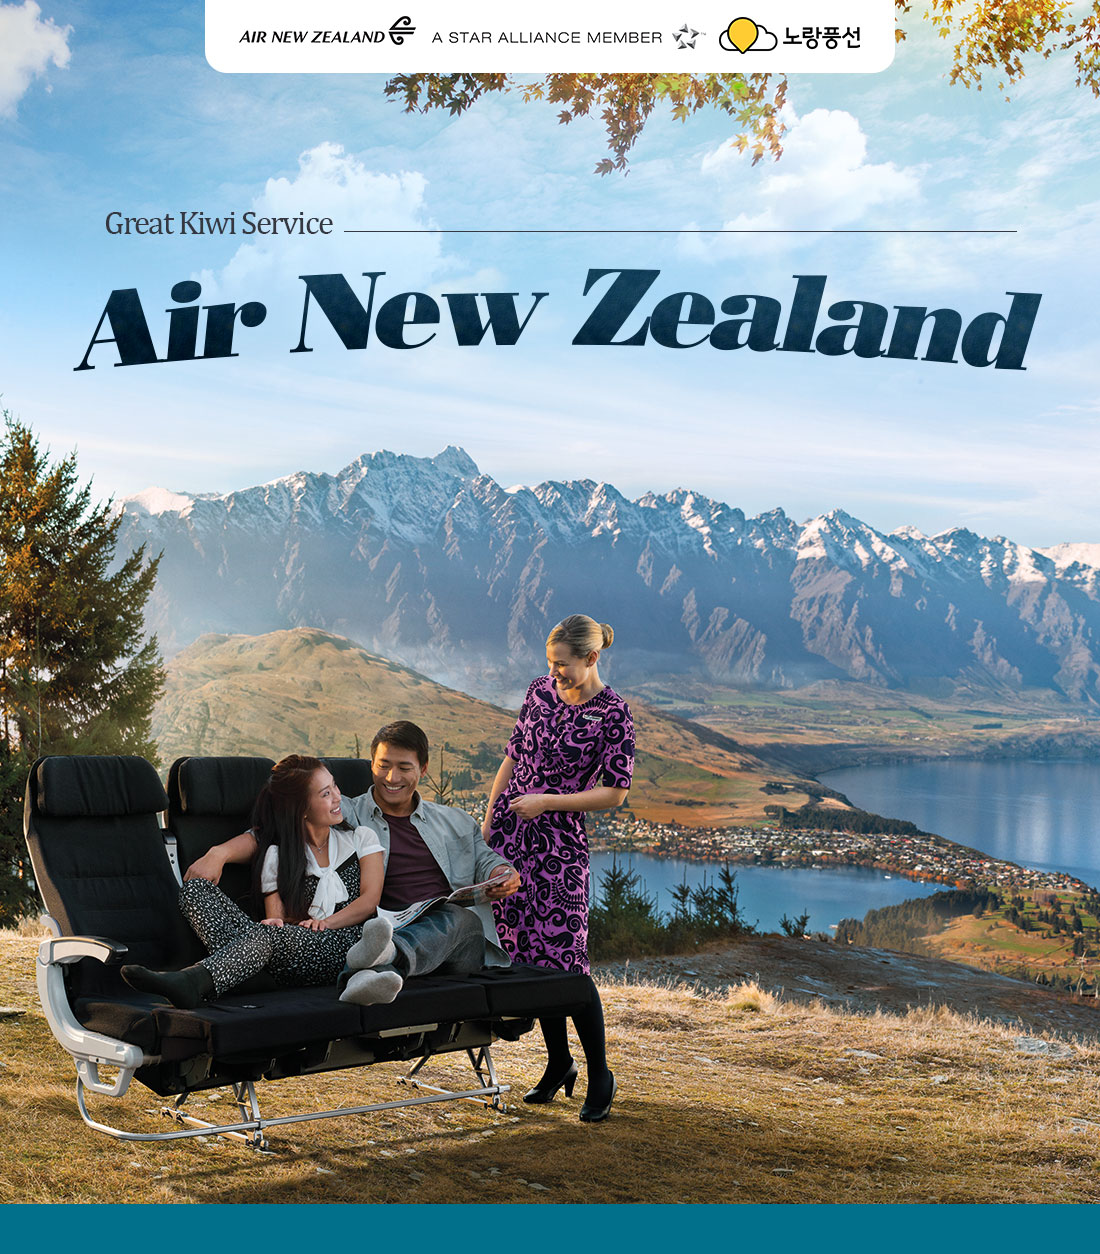 Great Kiwi Service Air New Zealand